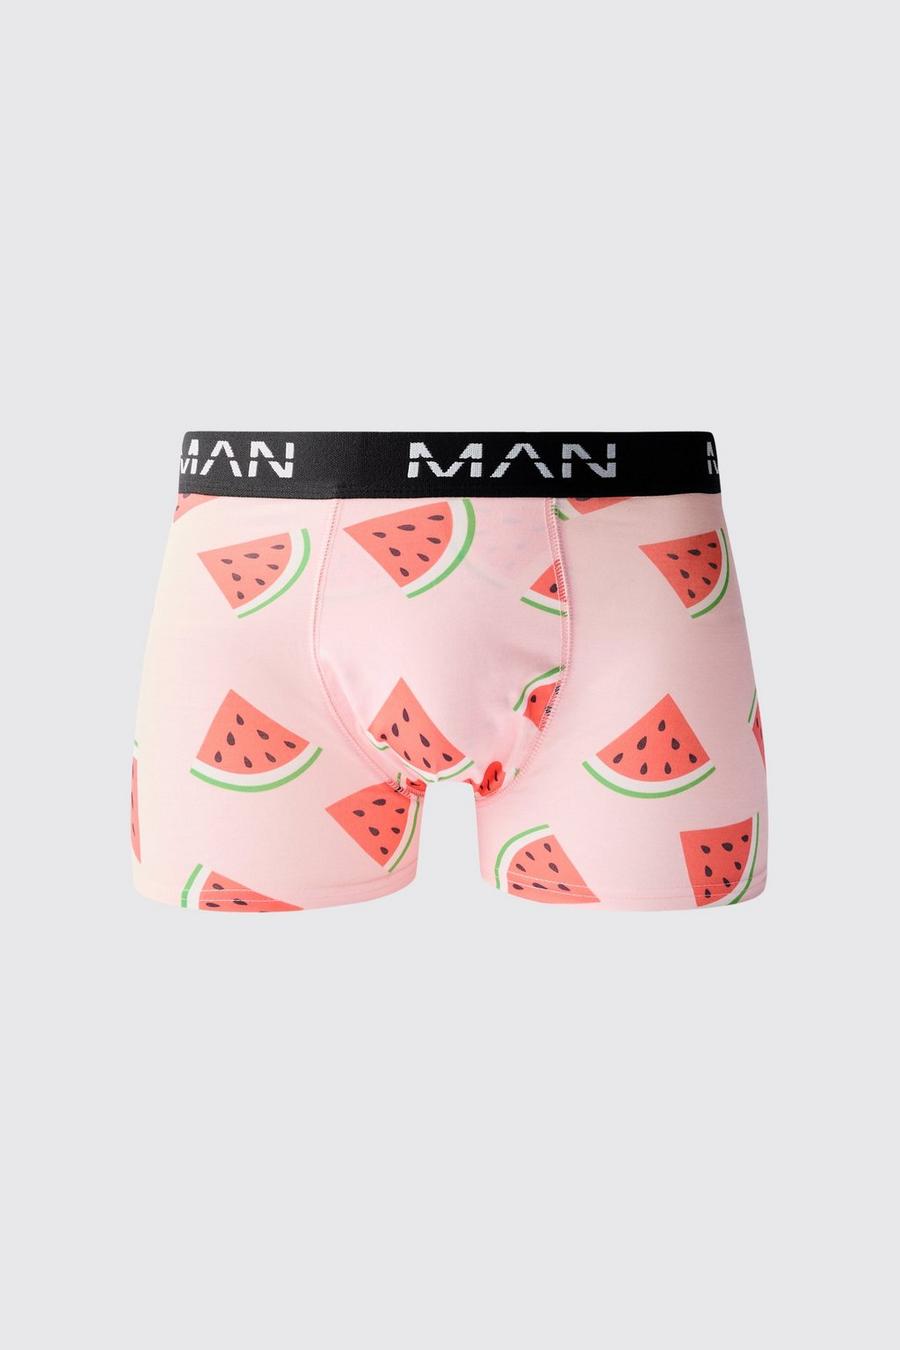 Multi Man Watermelon Slice Printed Boxers